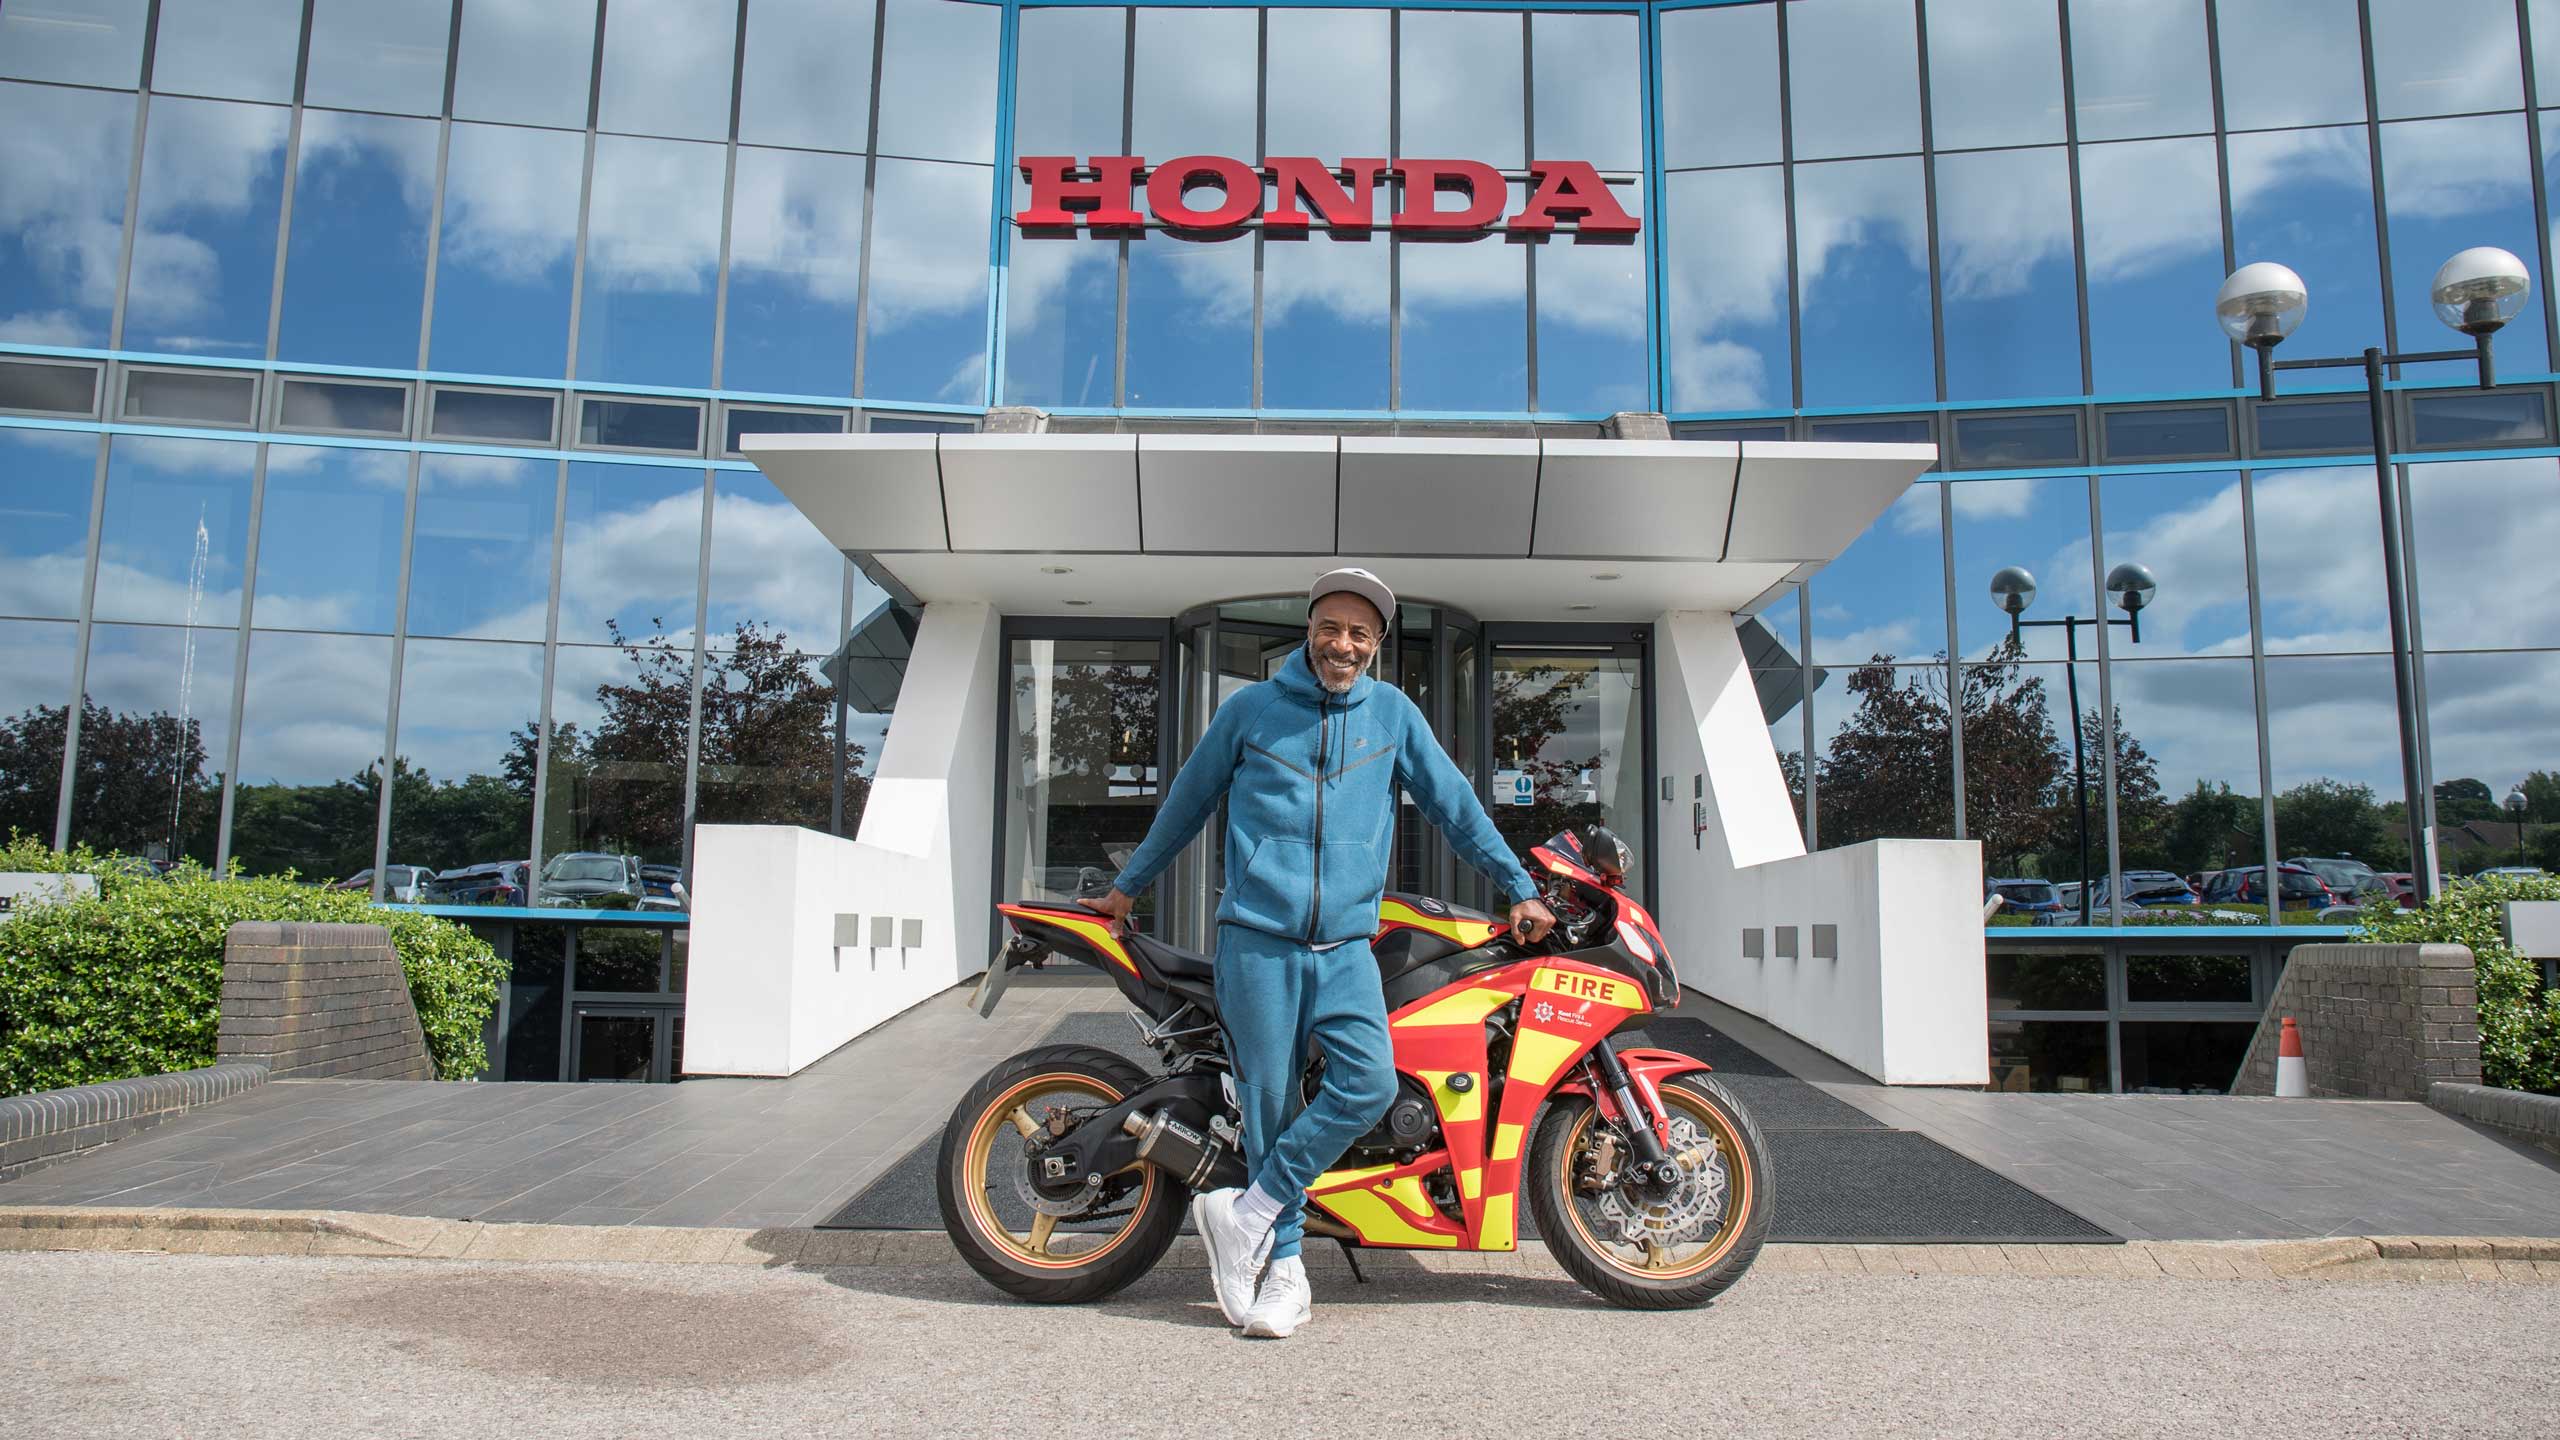 Danny John-Jules at Honda HQ Biker Down